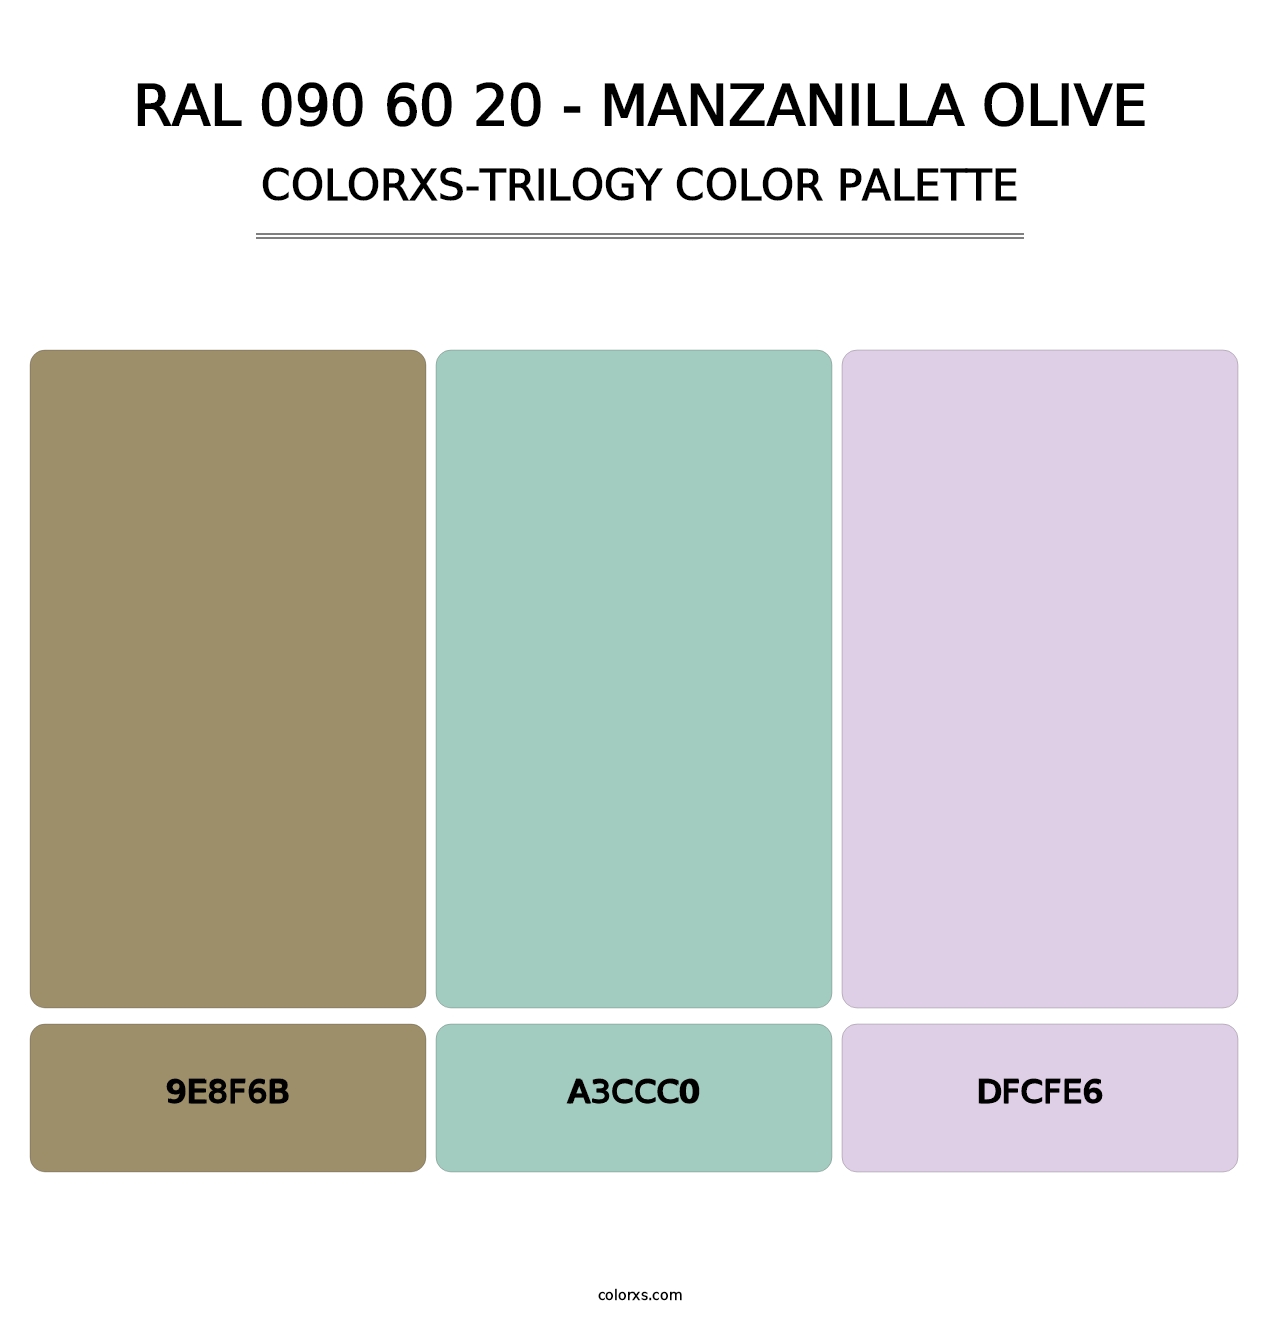 RAL 090 60 20 - Manzanilla Olive - Colorxs Trilogy Palette